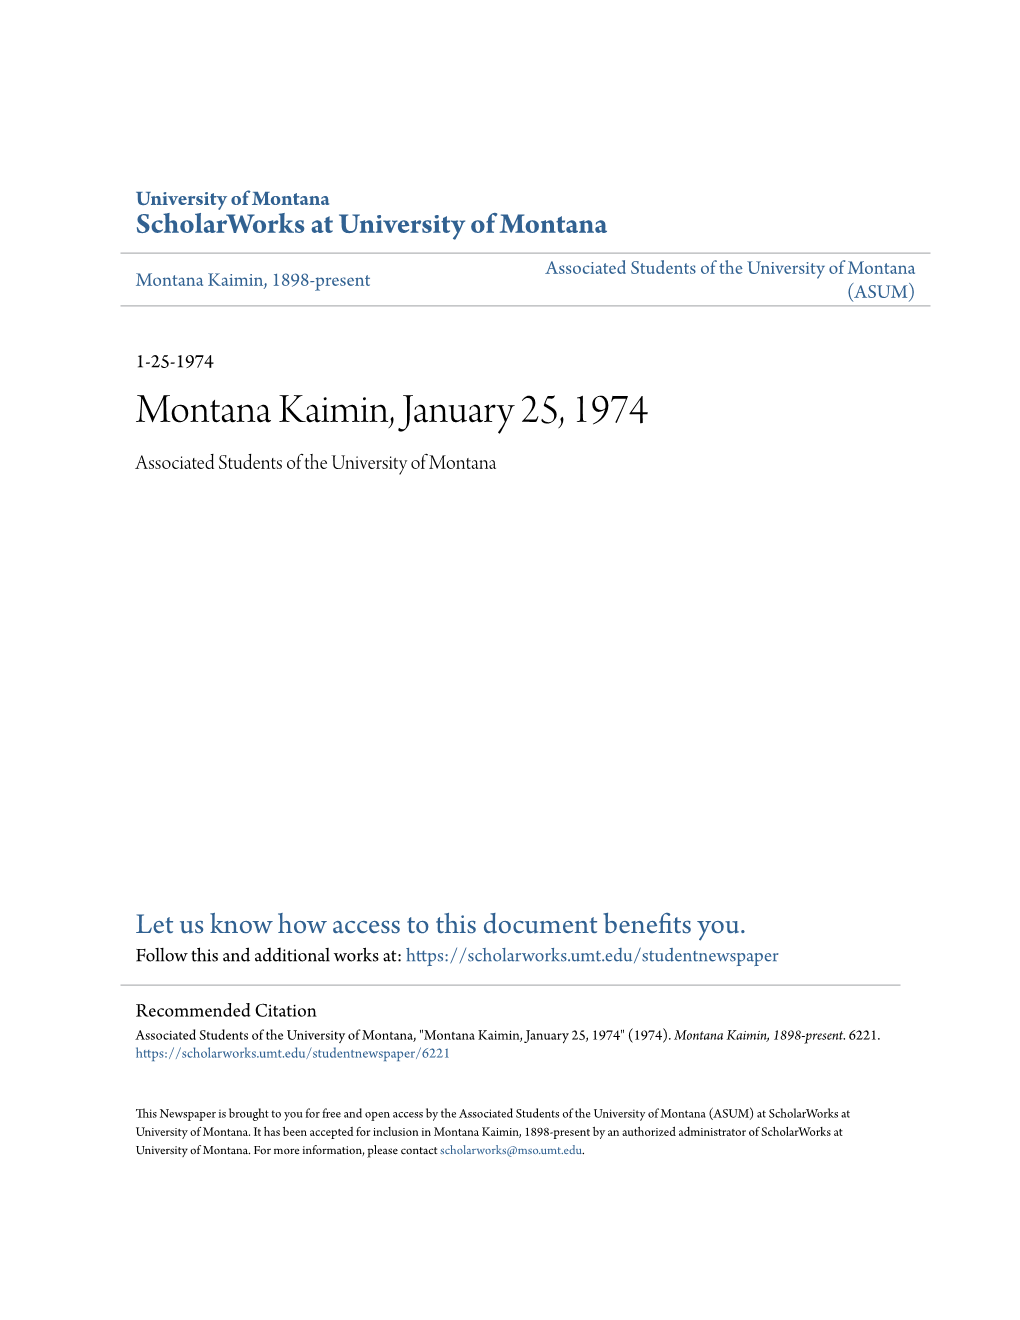 Montana Kaimin, January 25, 1974 Associated Students of the University of Montana